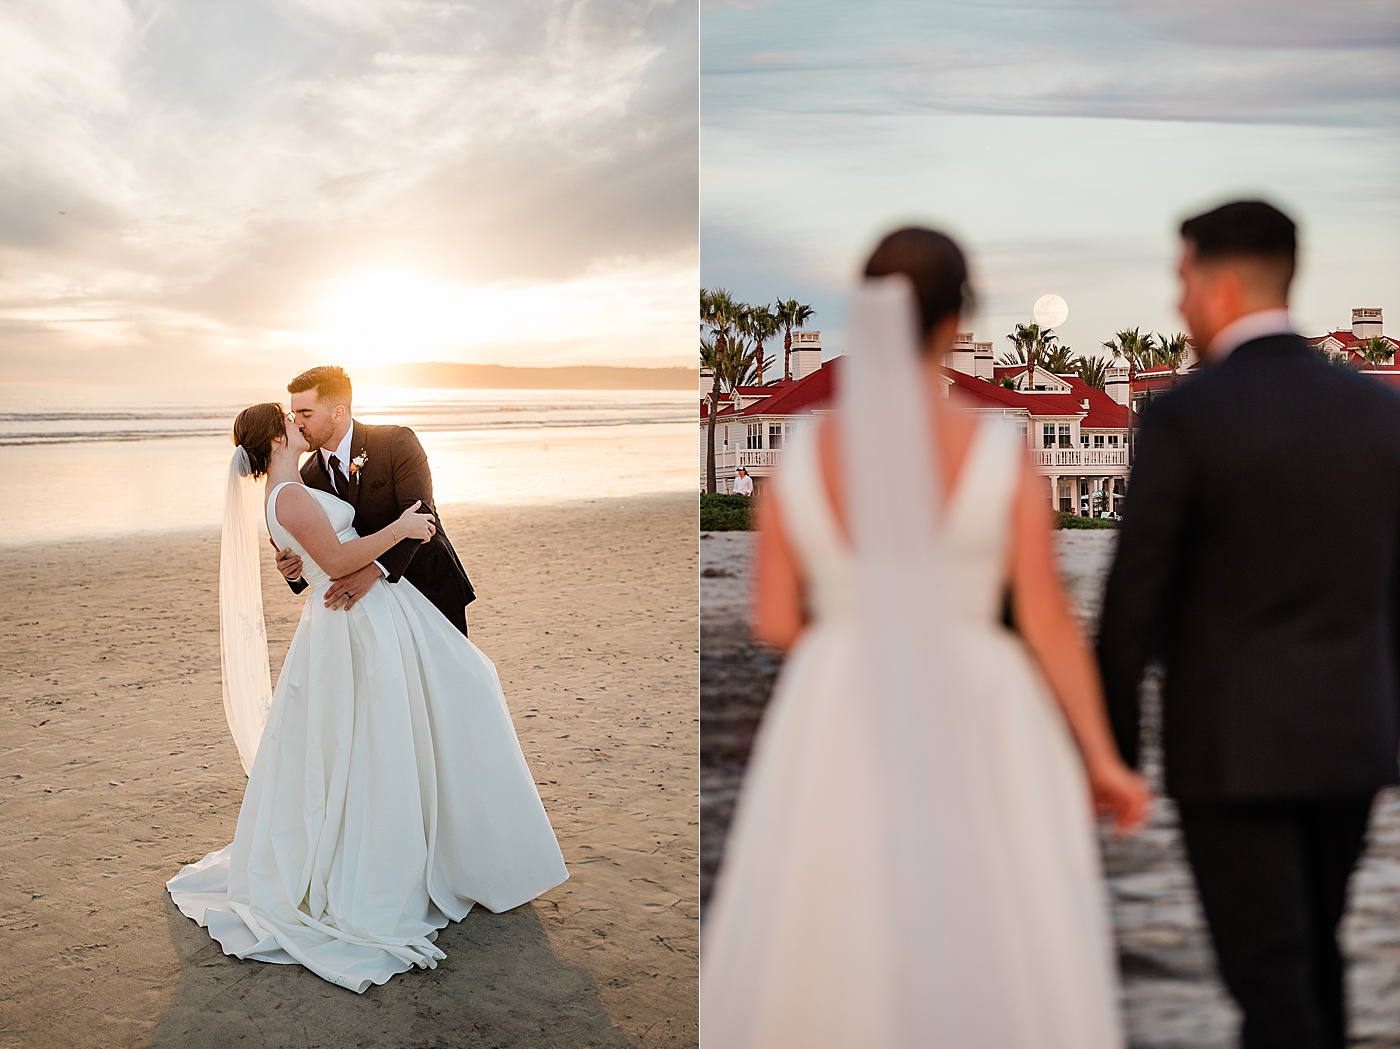 Coronado beach elopement at sunset. Bride and groom embracing at the beach.